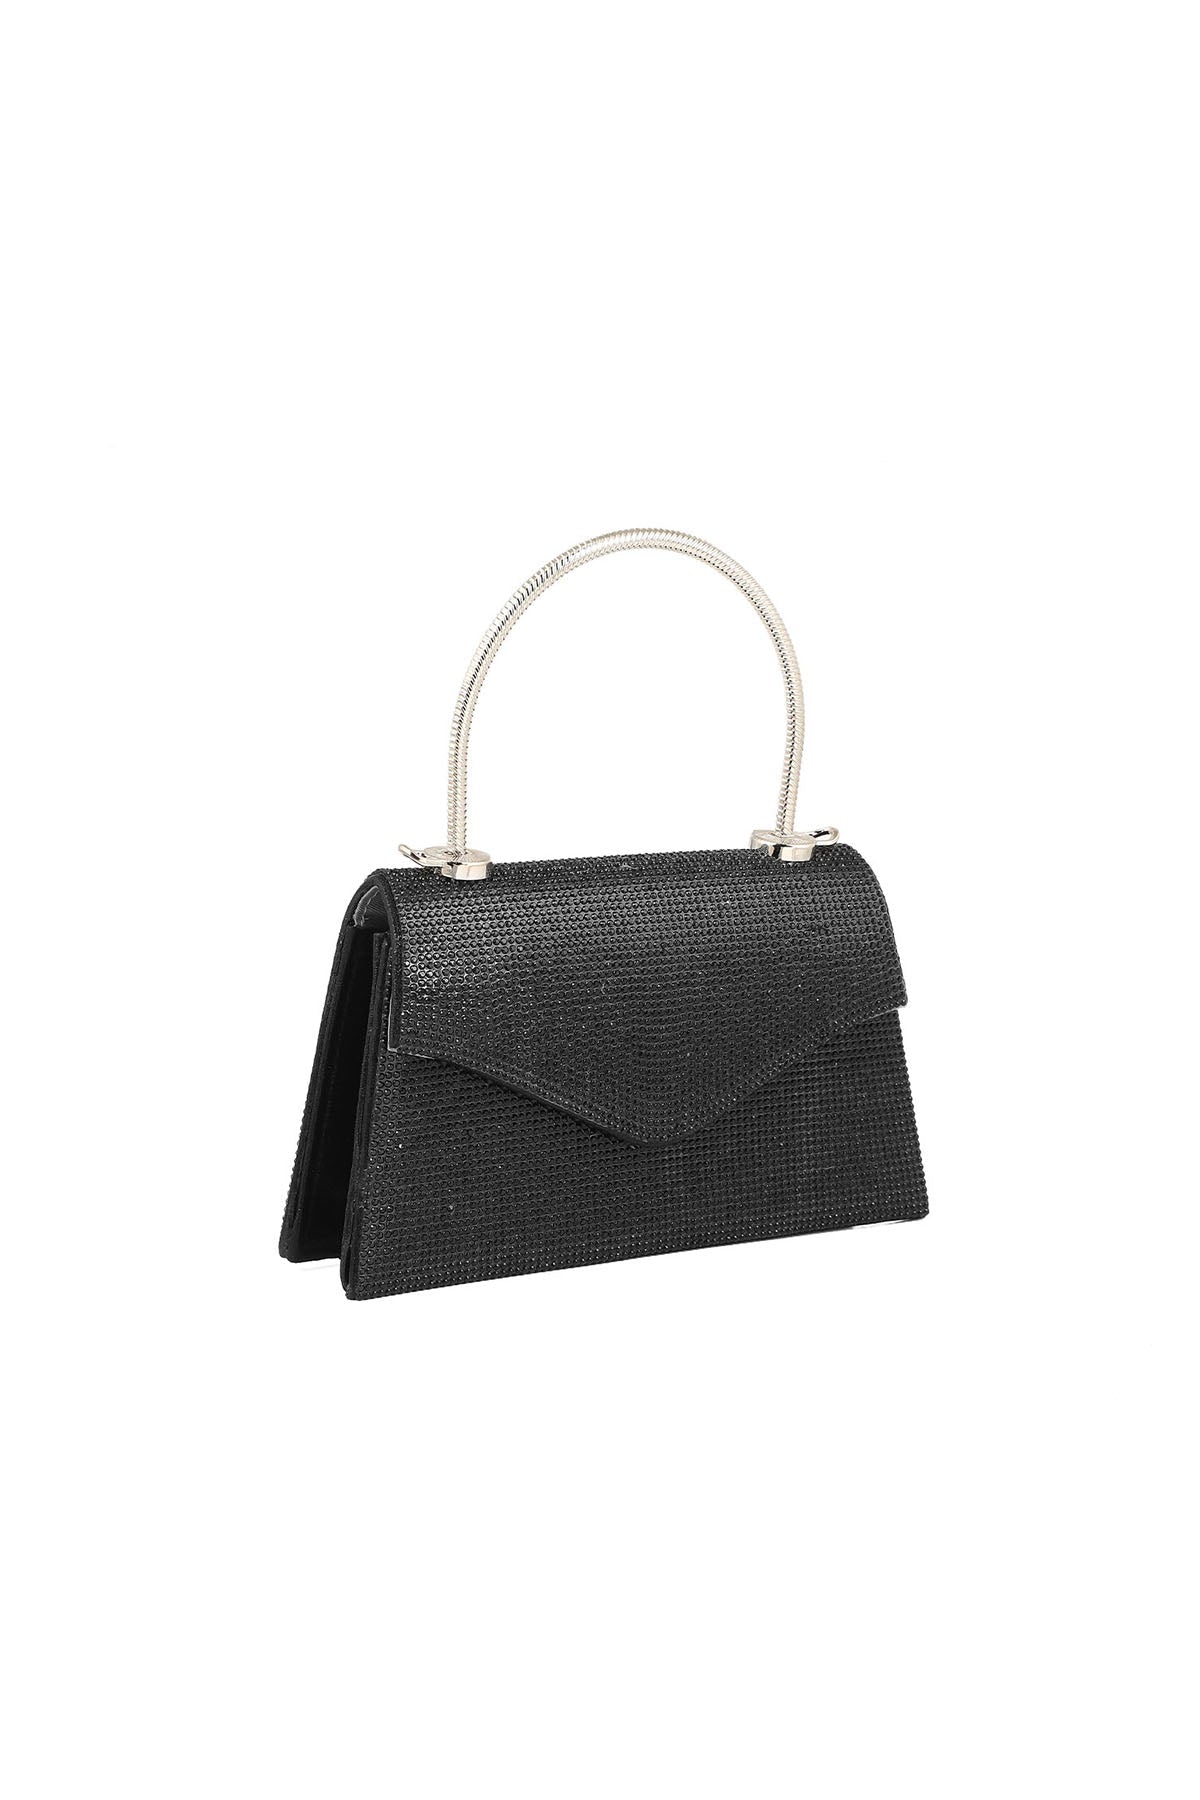 Top Handle Hand Bags B21603-Black